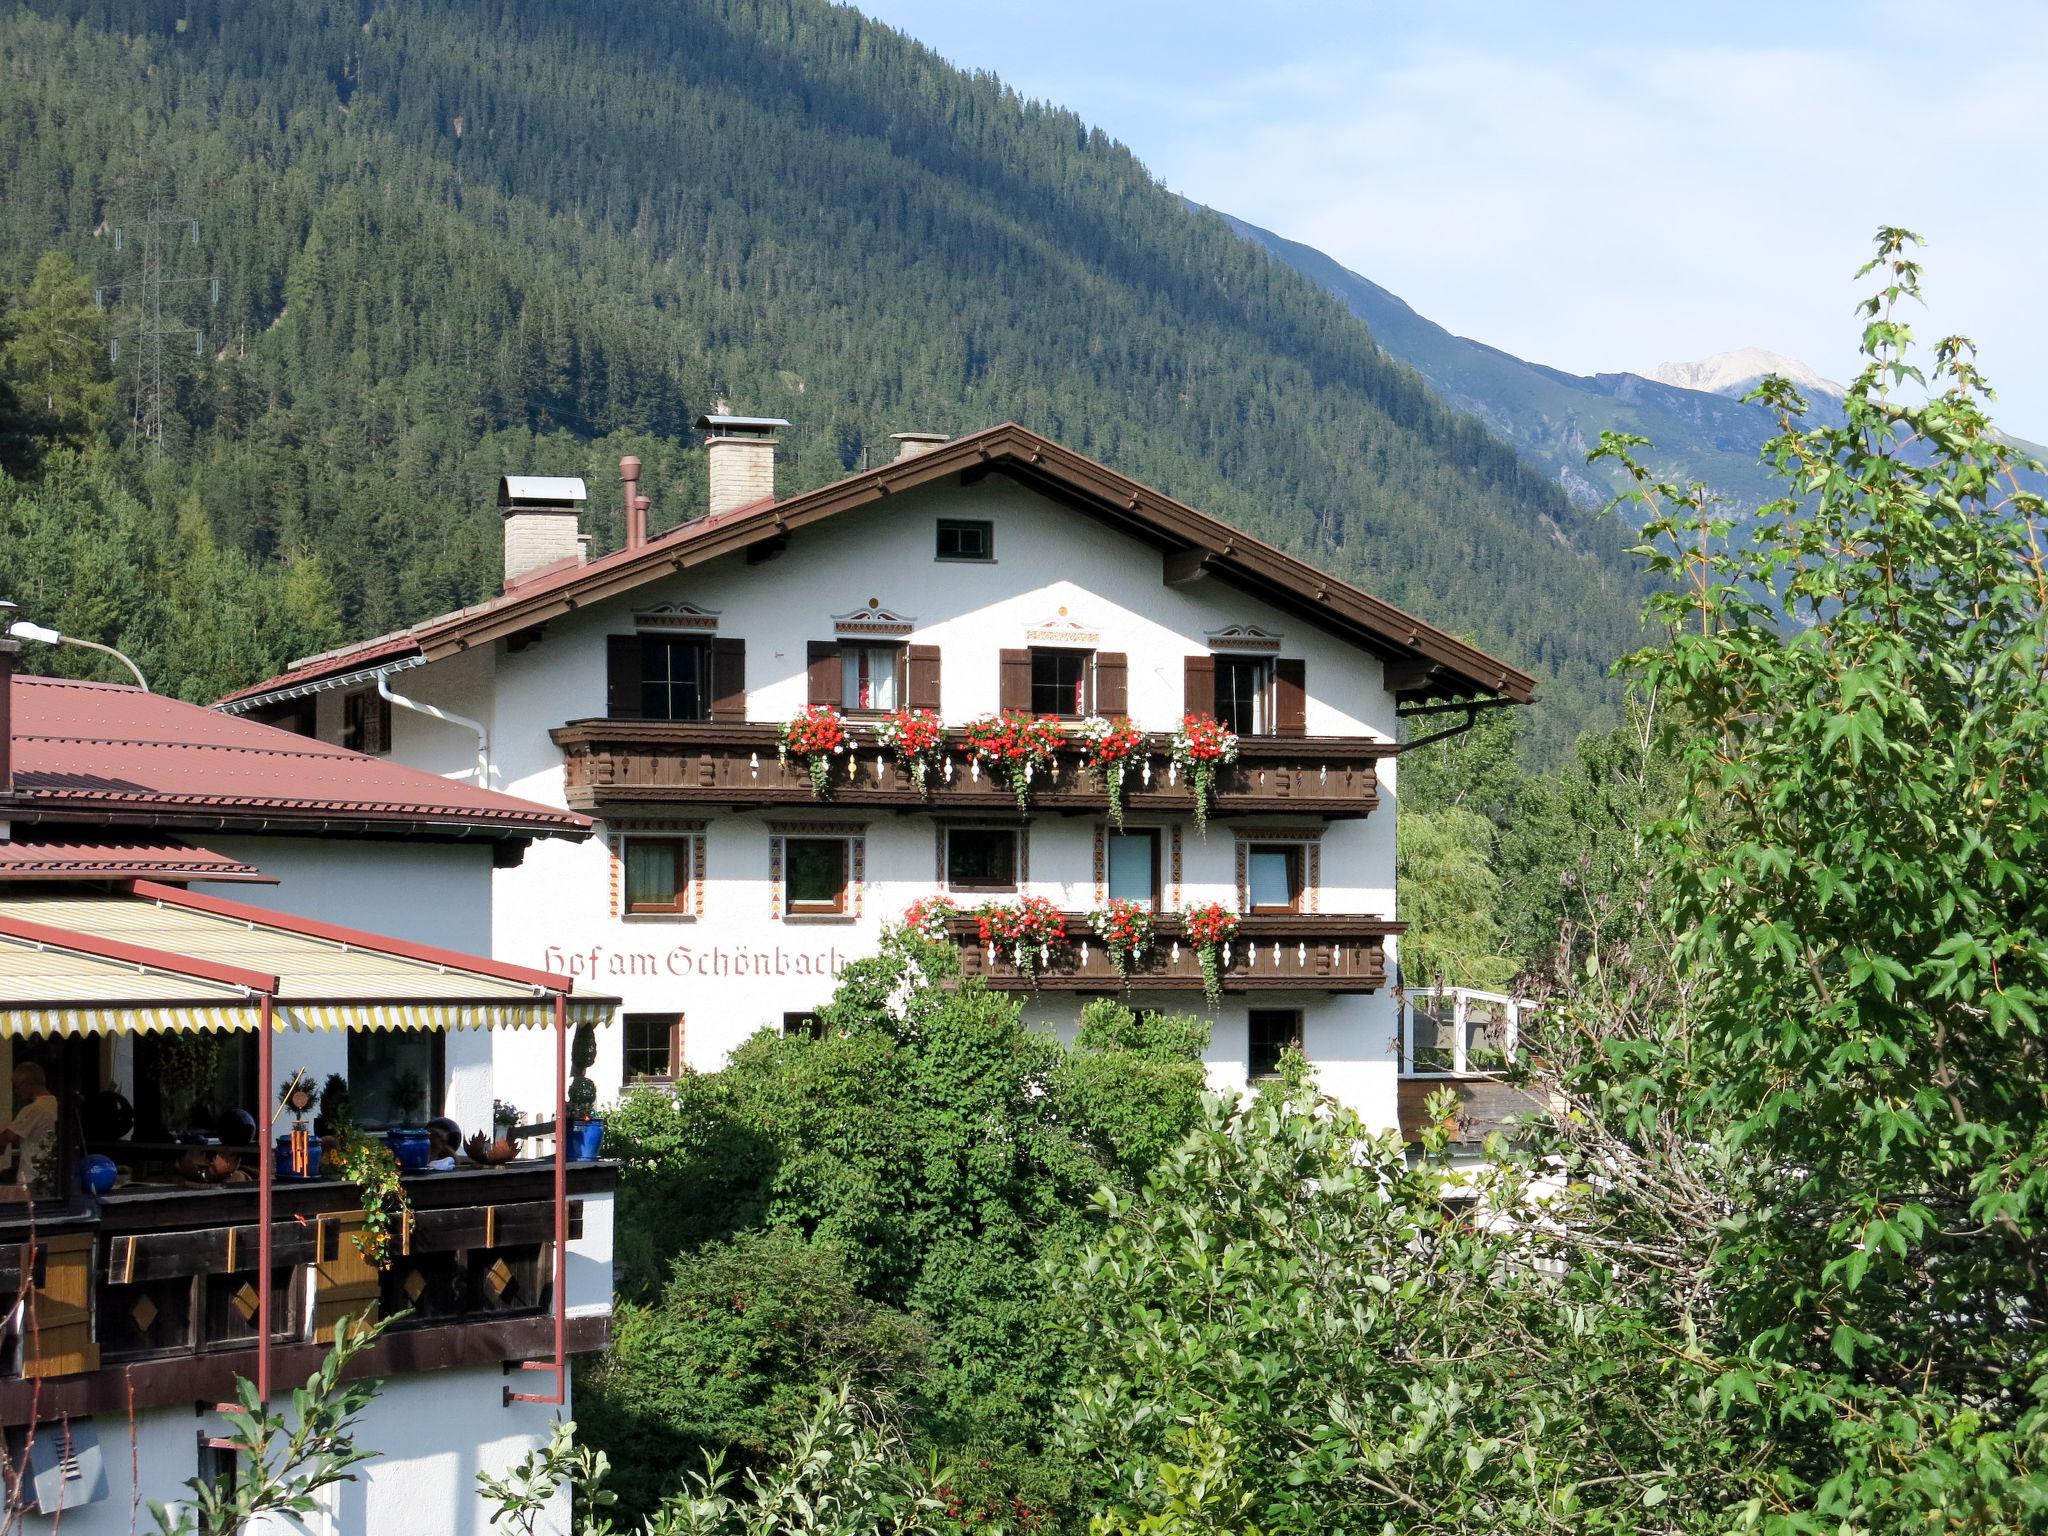 Foto 1 - Appartamento a Sankt Anton am Arlberg con giardino e vista sulle montagne